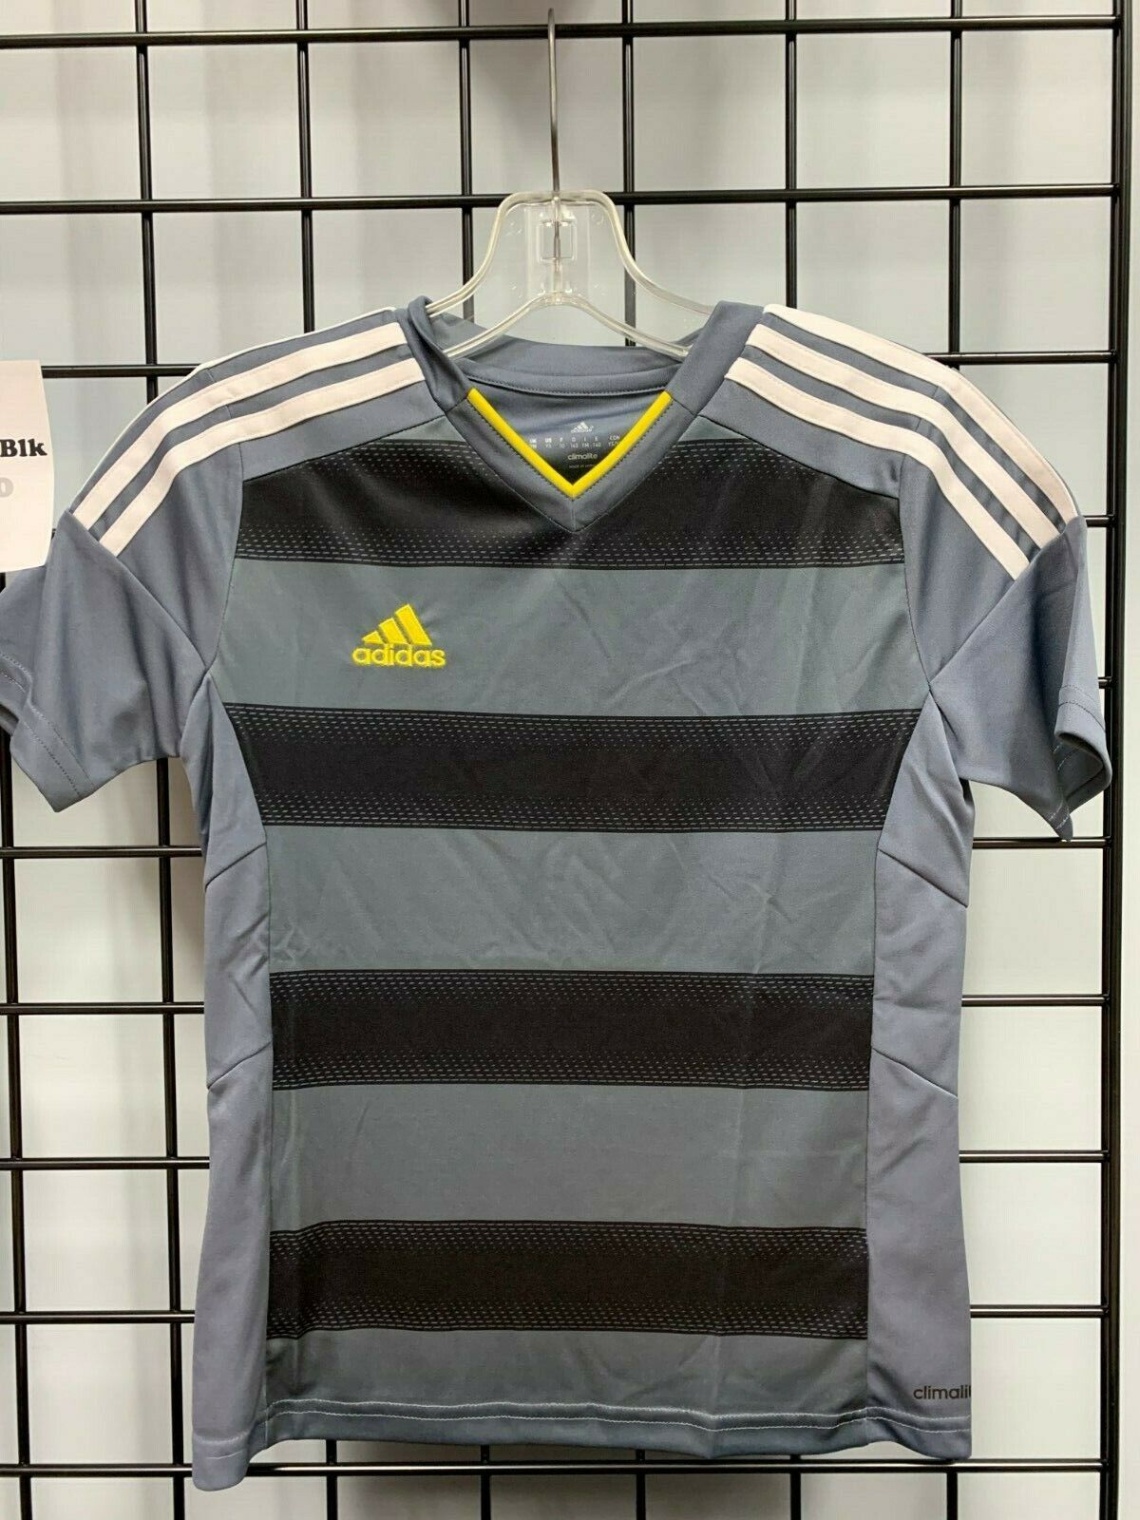 adidas soccer jersey design Bulan 2 Adidas Fortore Custom Soccer Jersey Grey/Black